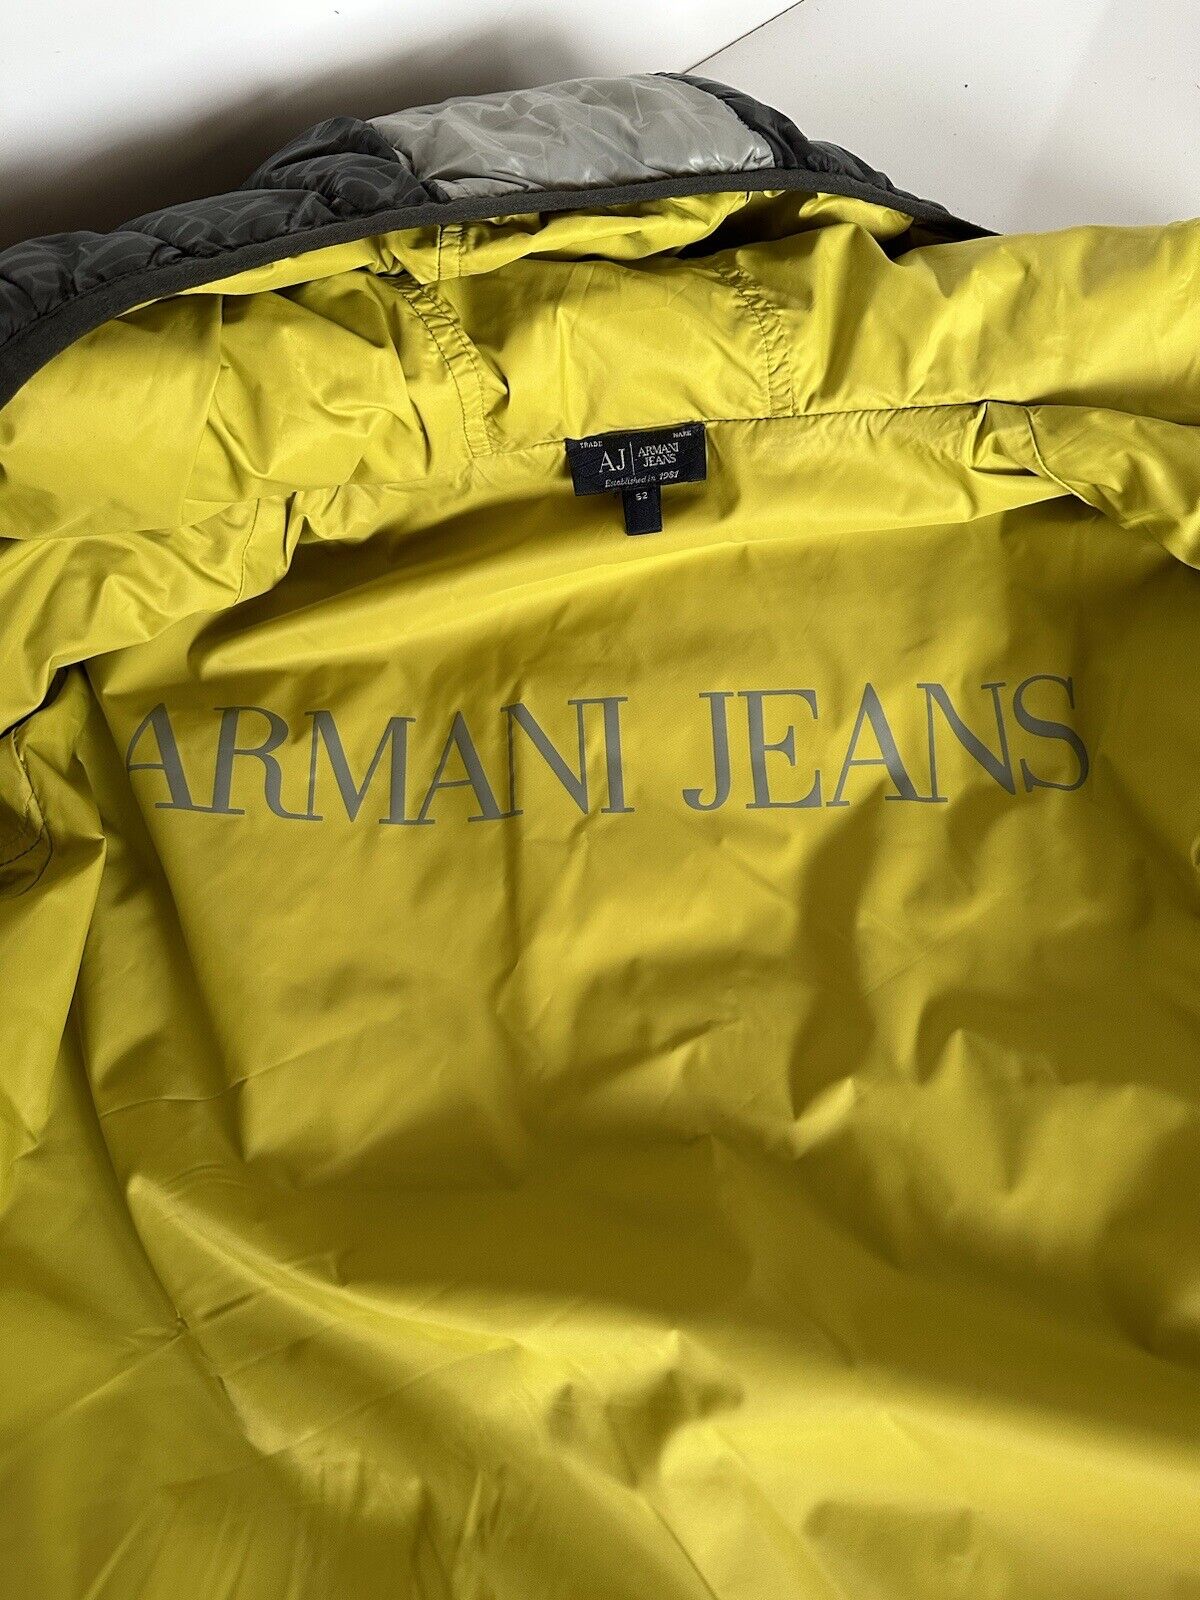 Armani Jeans 2-seitige Wende-Puffjacke in Grau/Gelb mit Kapuze, Größe L (52) 